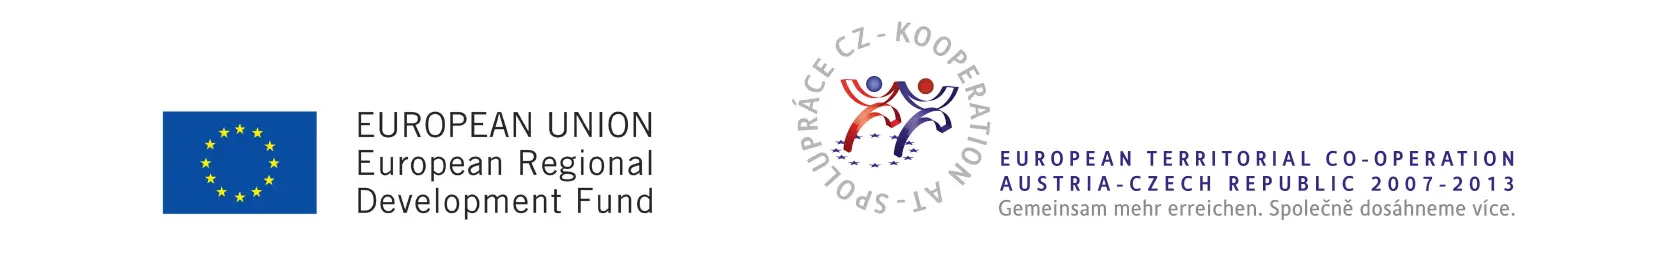 Logos of European Regional Development Fund, European territorial cooperation - Austria and Czech Republic